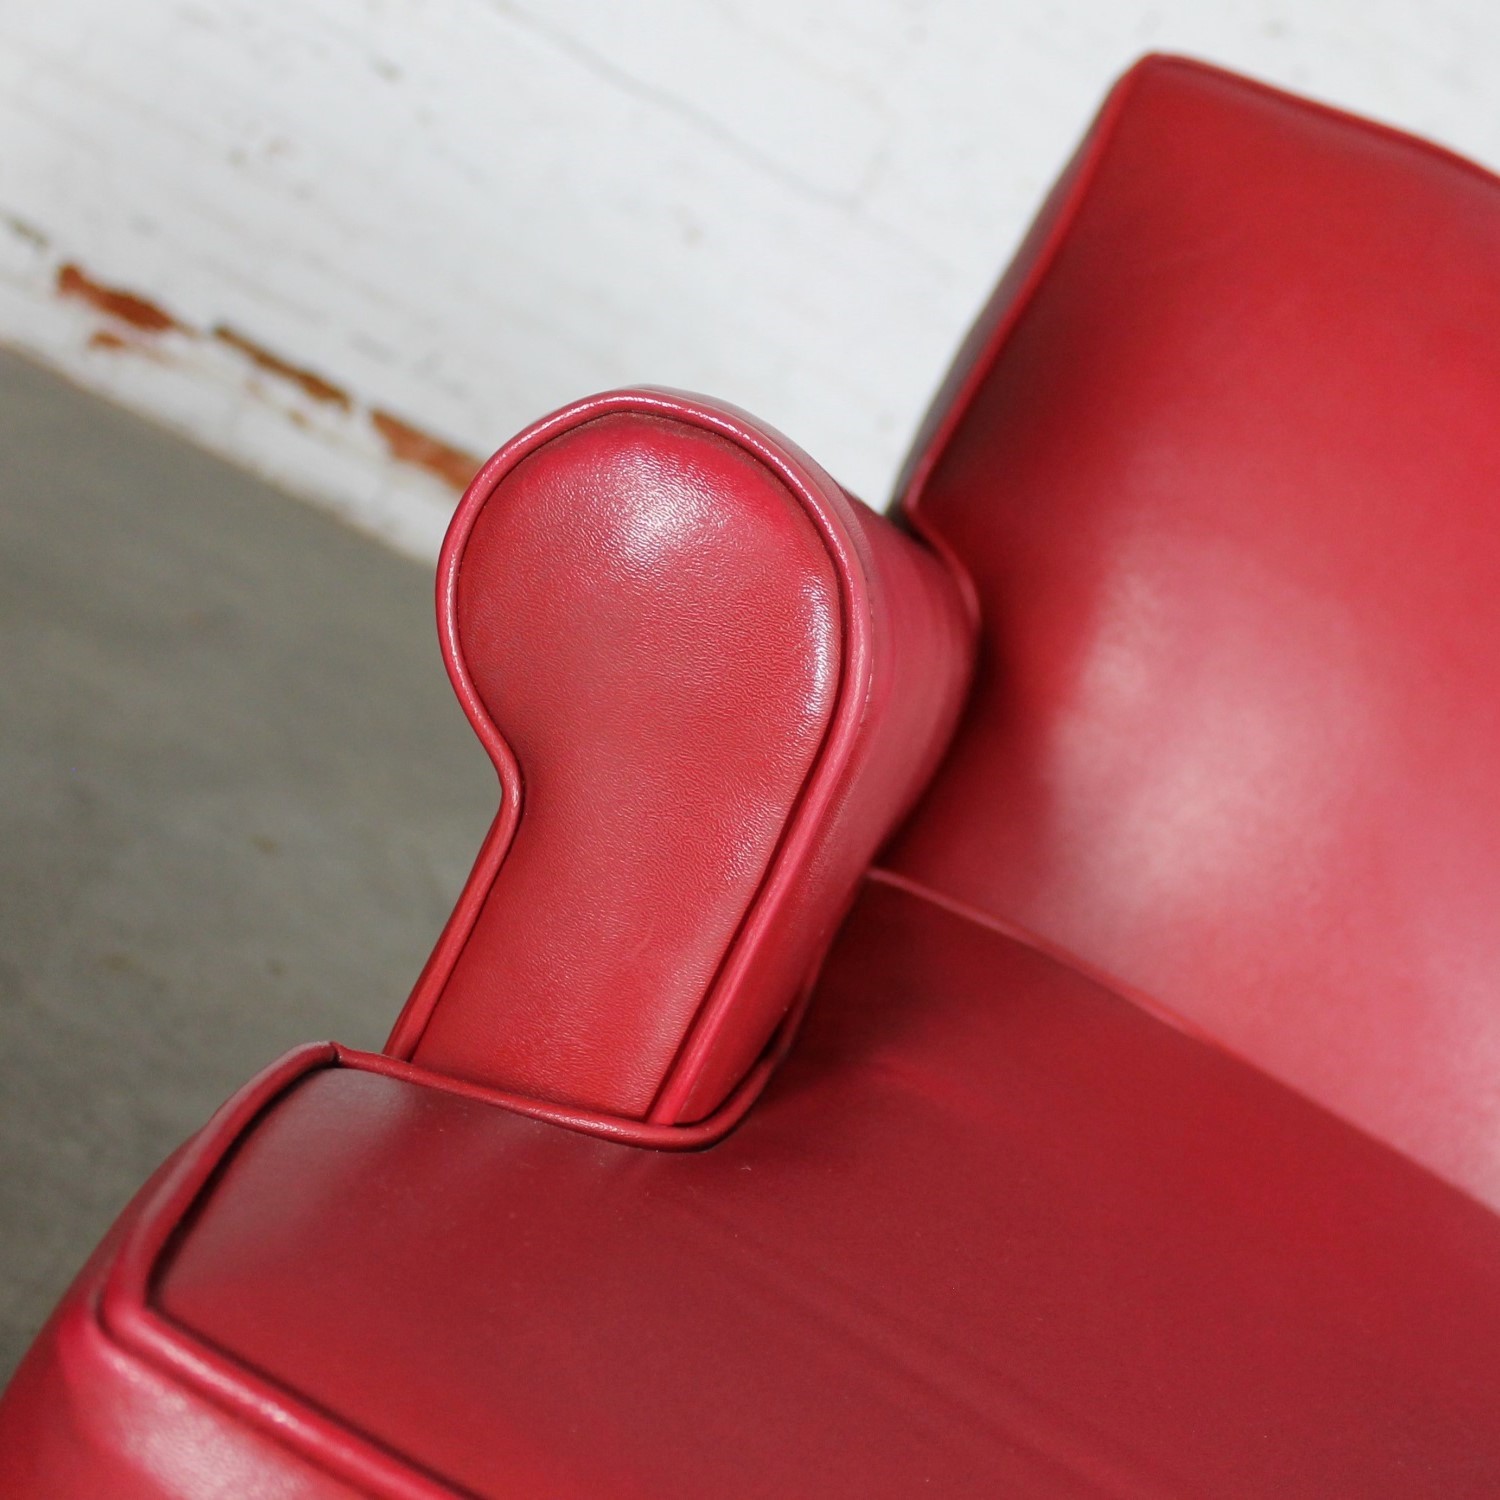 Vintage 1940s Red Vinyl Club Chairs a Pair